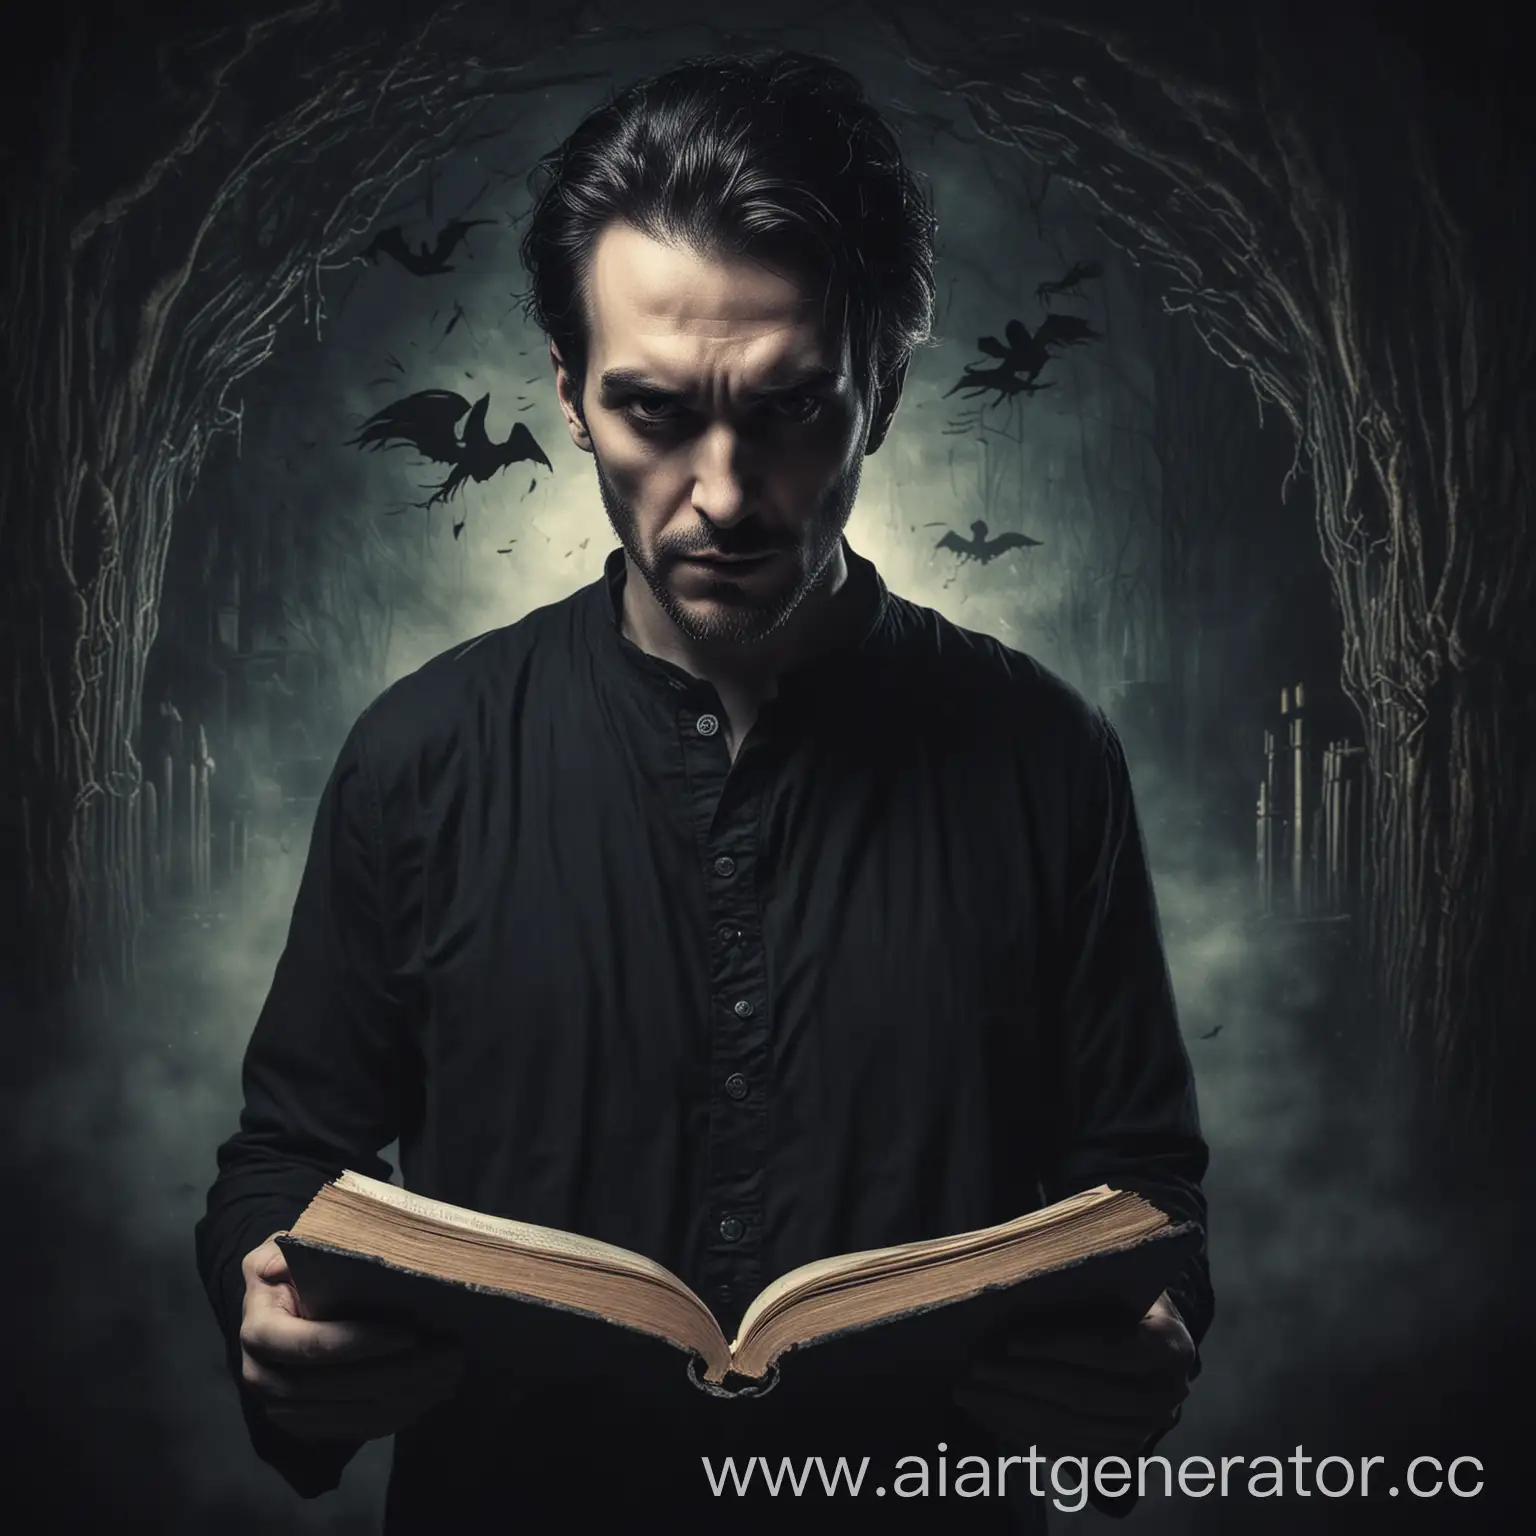 Dark-Storyteller-with-Mystical-Book-Creator-of-Nightmares-and-Narrator-of-Horror-Stories